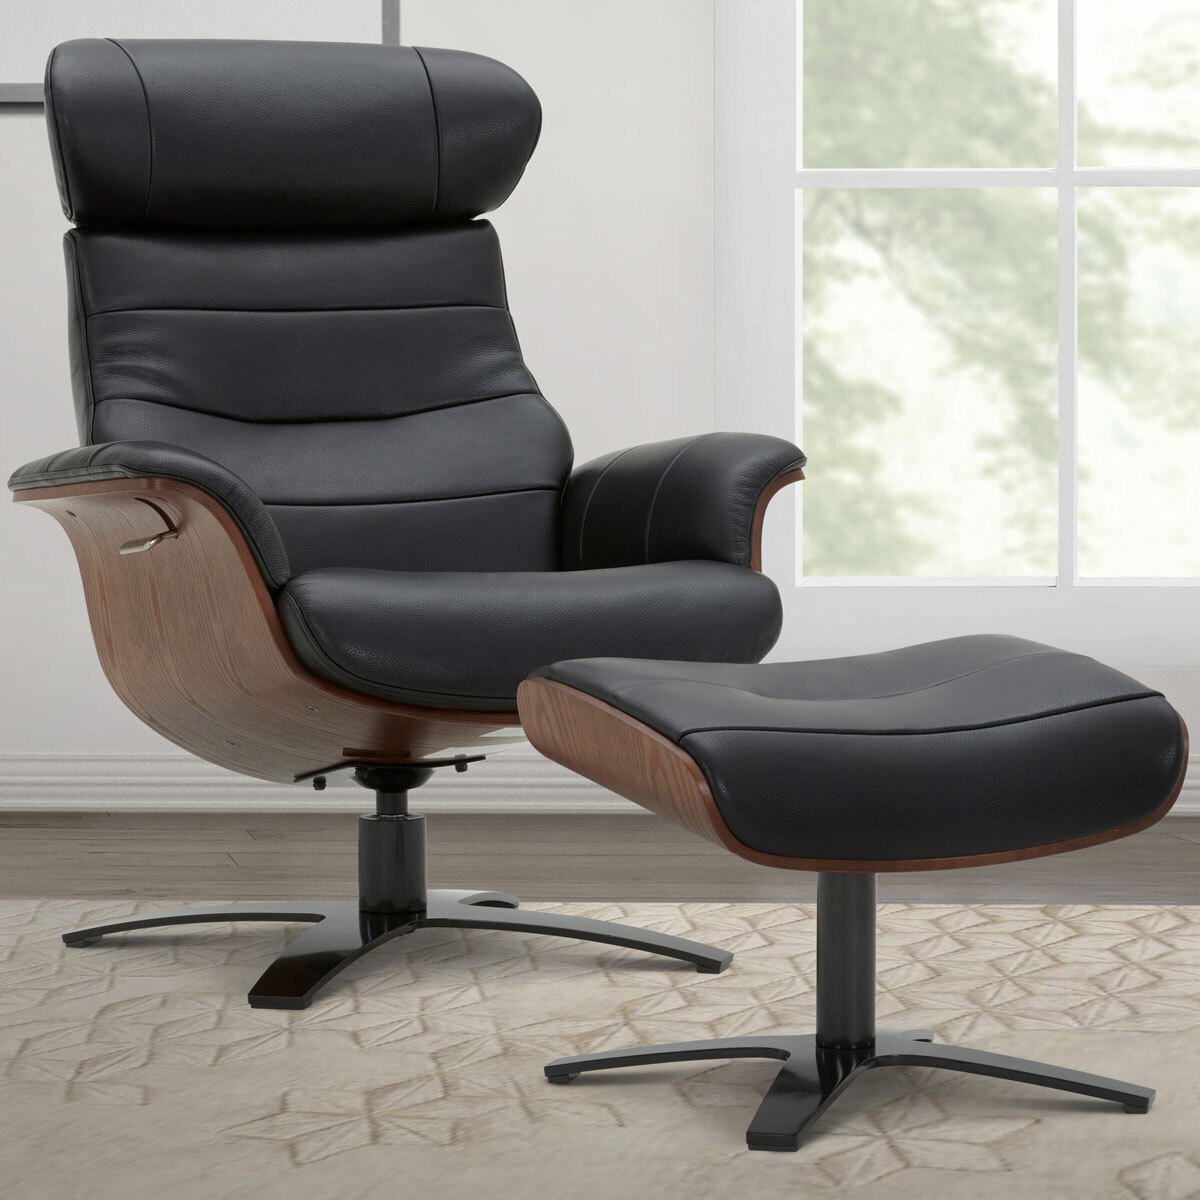 Karma Black Leather Swivel Chair, Black Leather Swivel Chairs